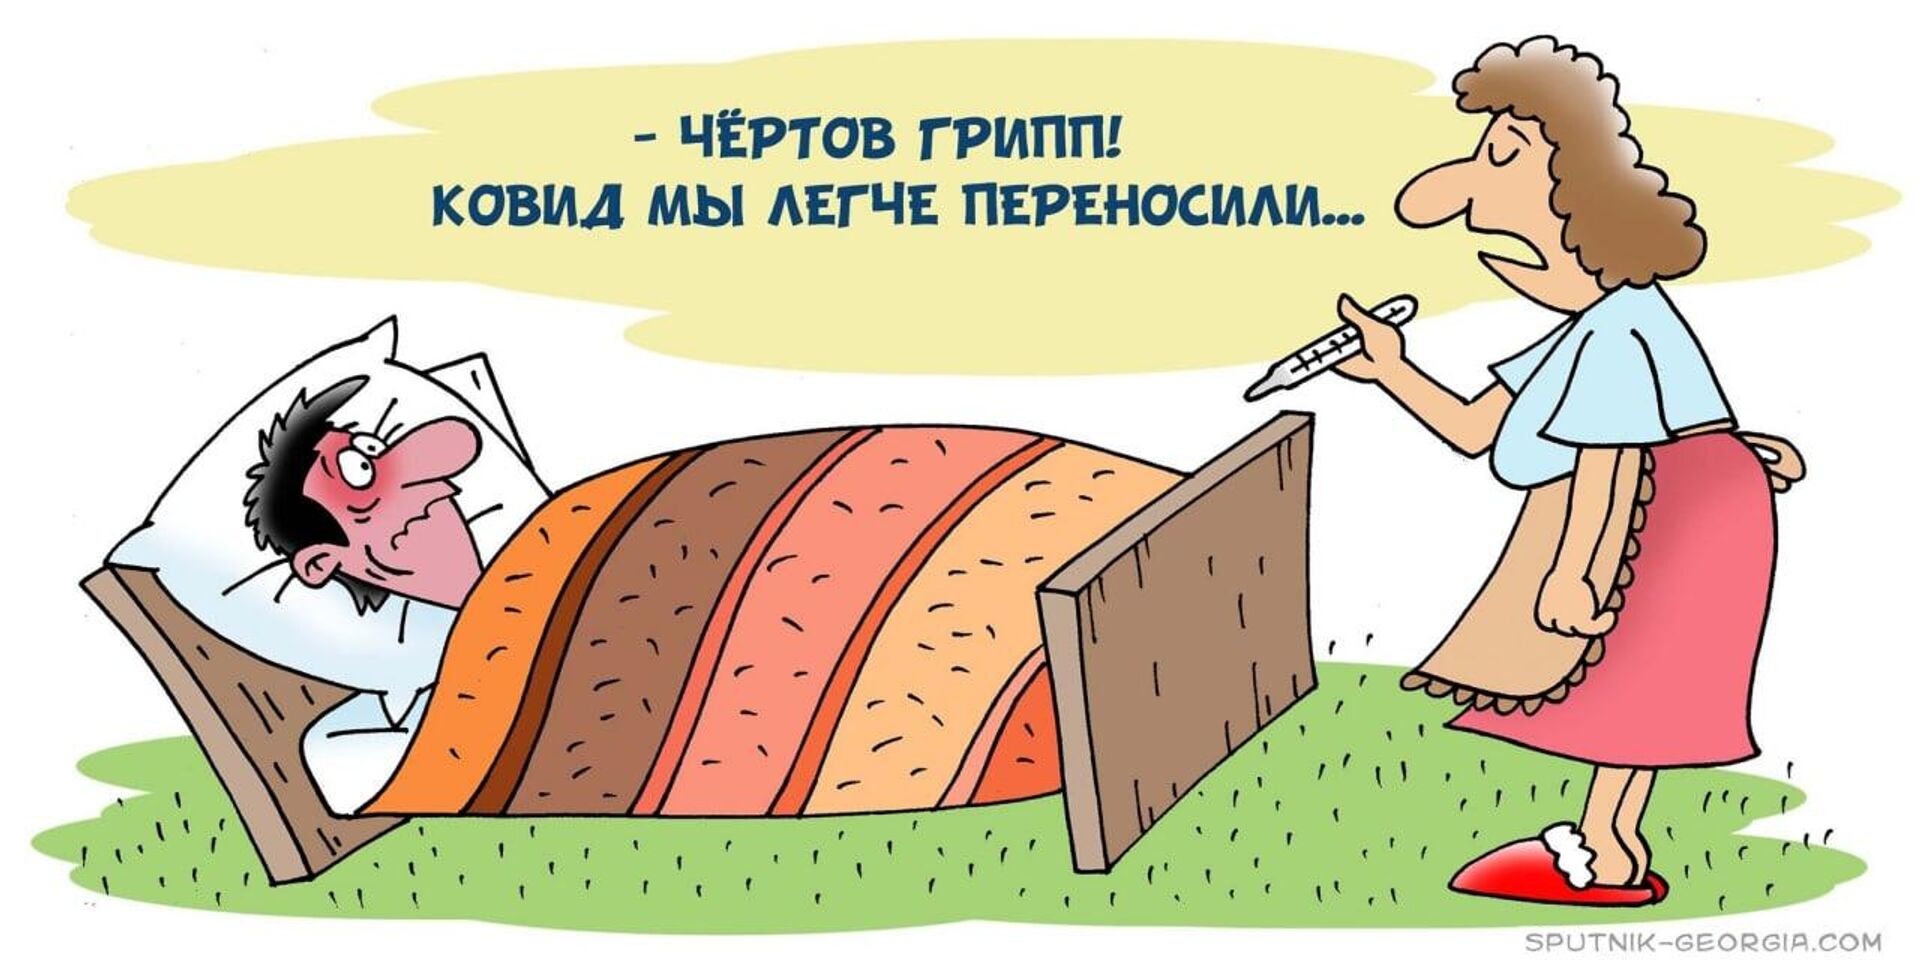 Чертов грипп, или Верните ковид! карикатура - Sputnik Грузия, 1920, 05.12.2022